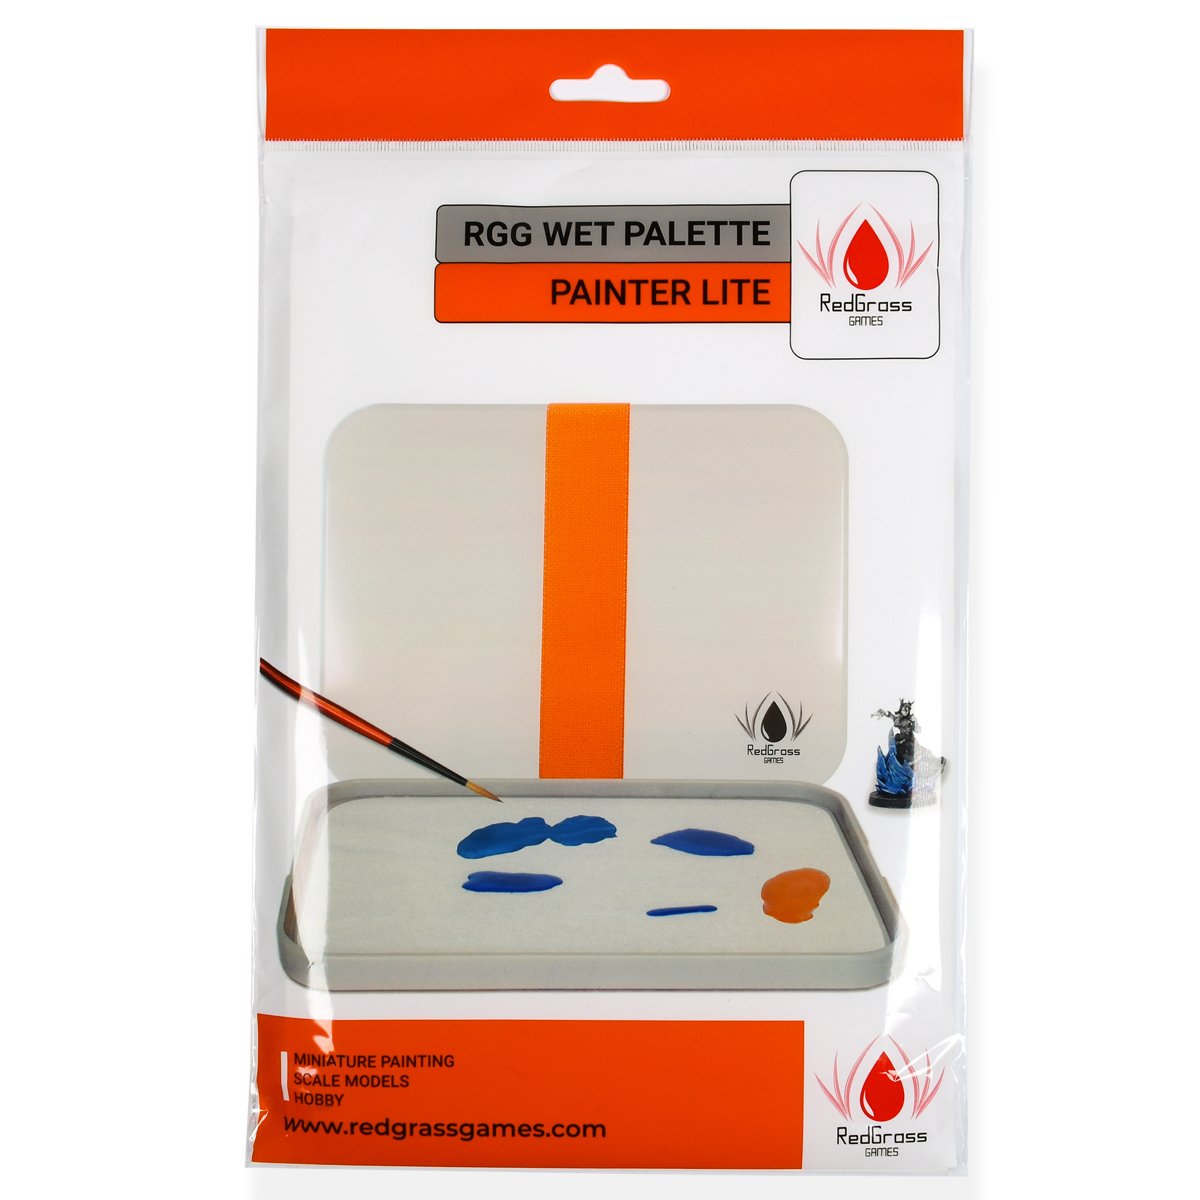 Redgrass Everlasting Wet Palette - Painter Lite (Blue Edition)